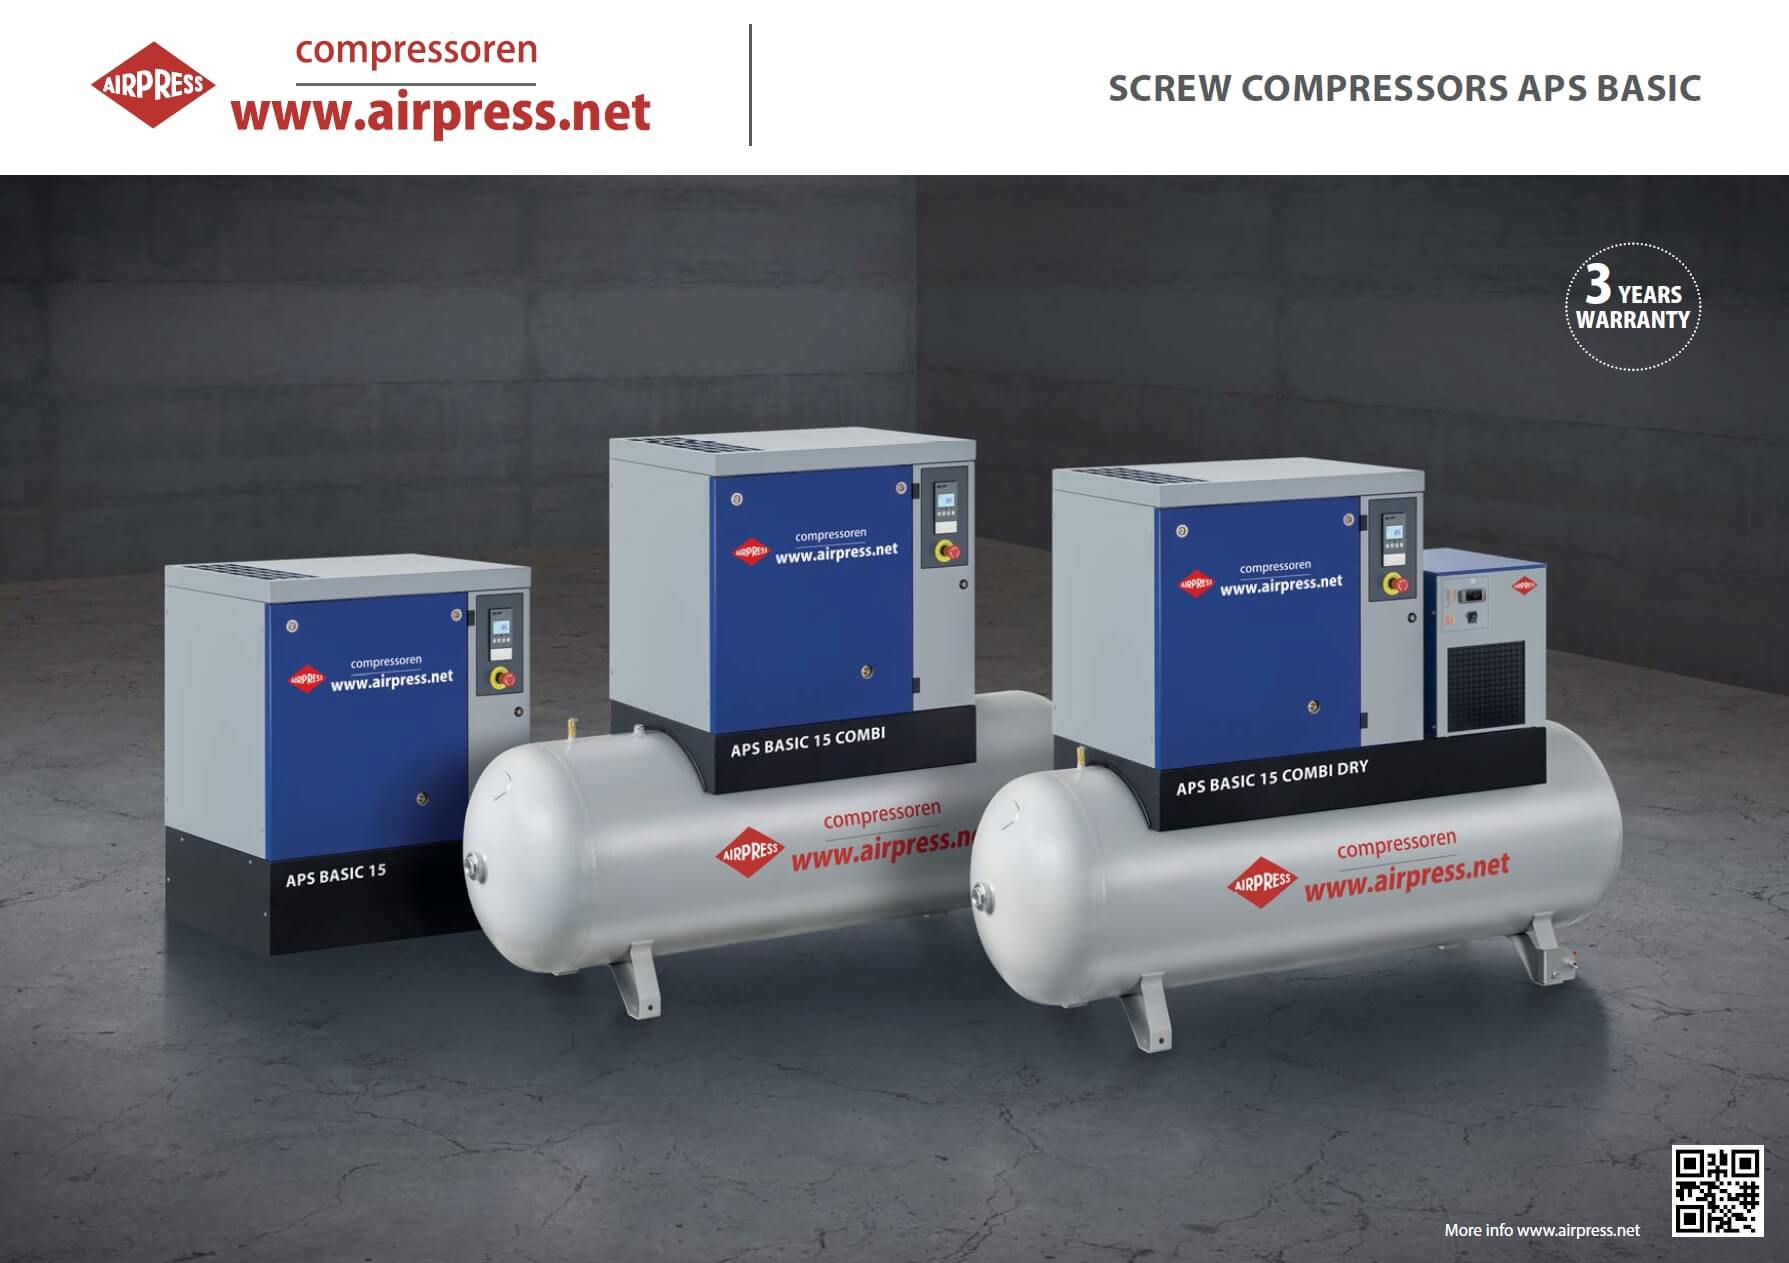 Screwcompressors APS BASIC